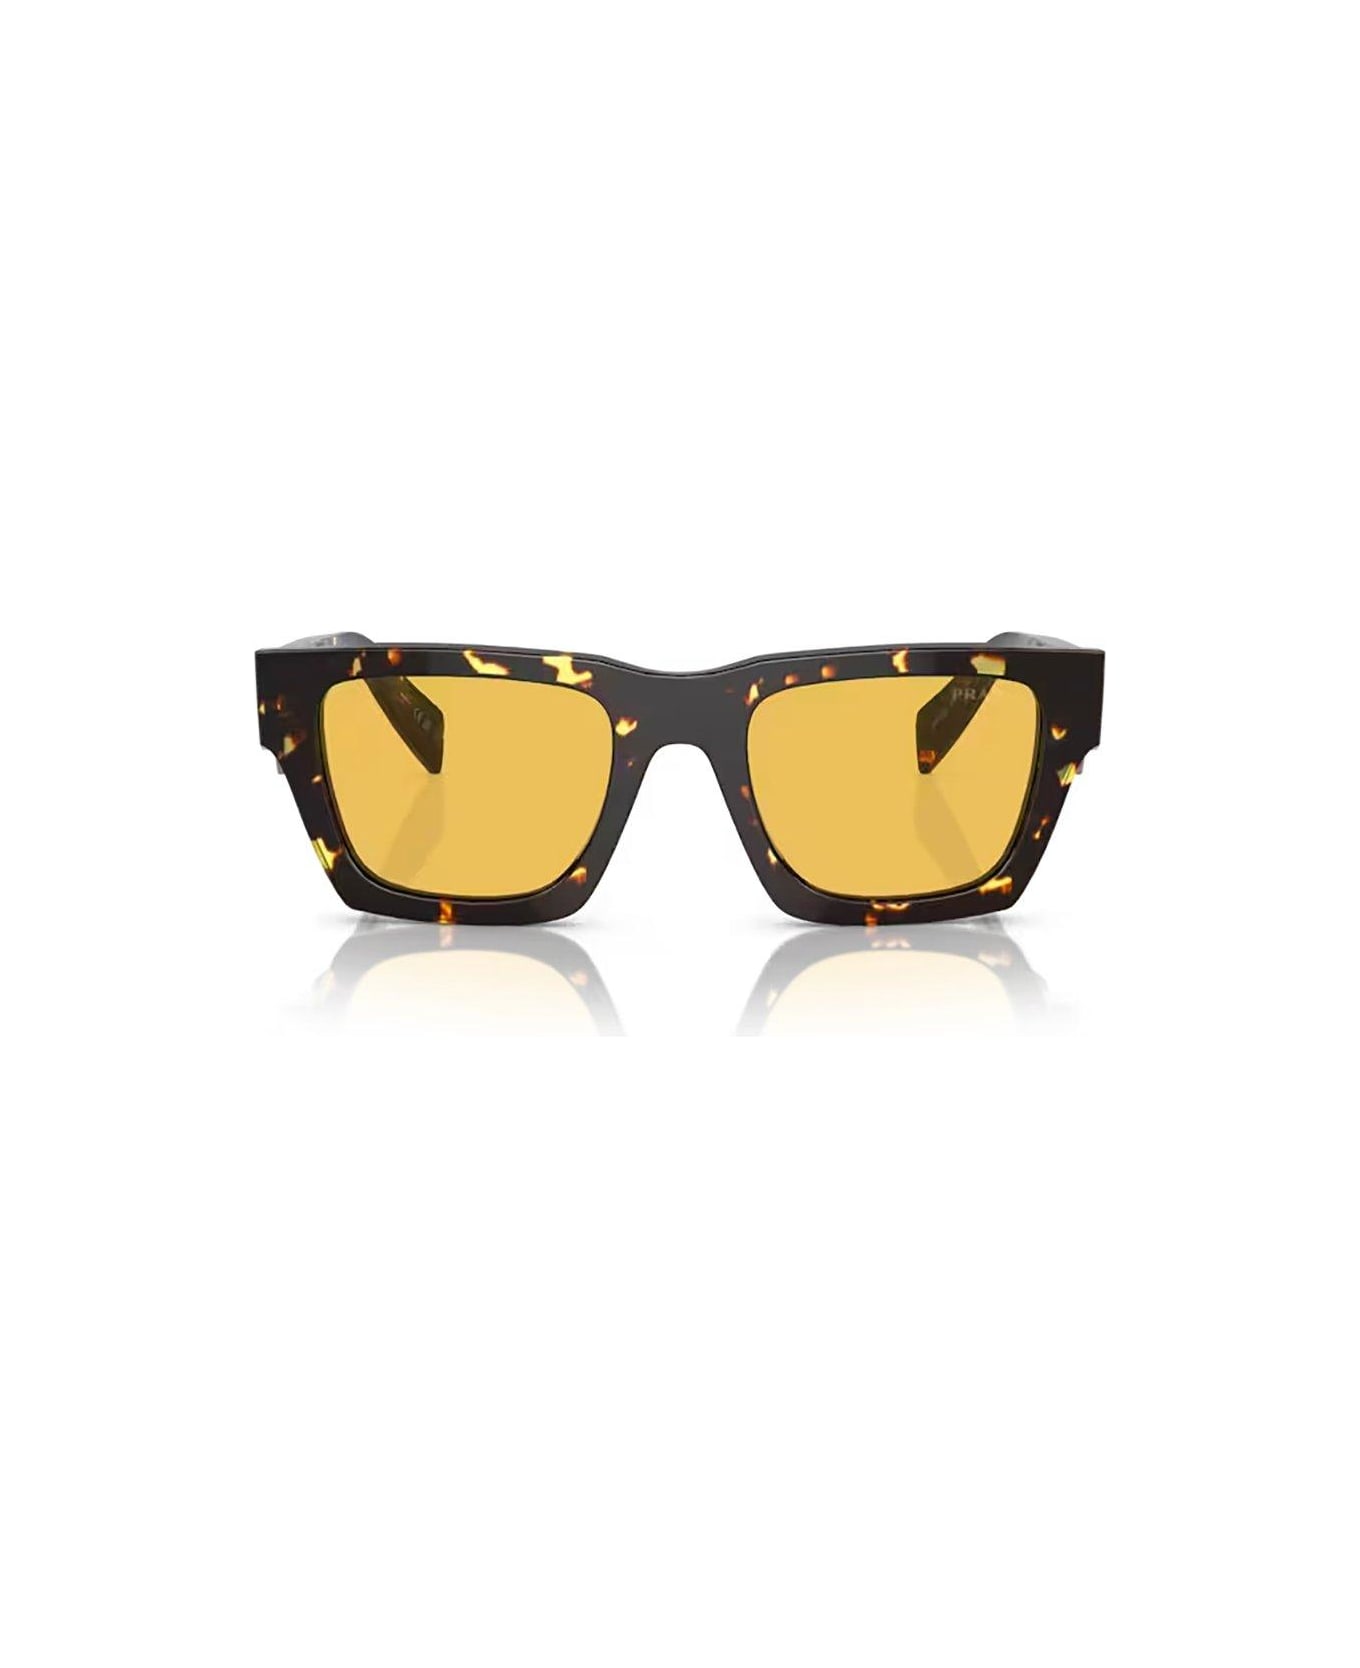 Prada Eyewear Square Frame Sunglasses Sunglasses - 16O10C Tortoise Black Malt